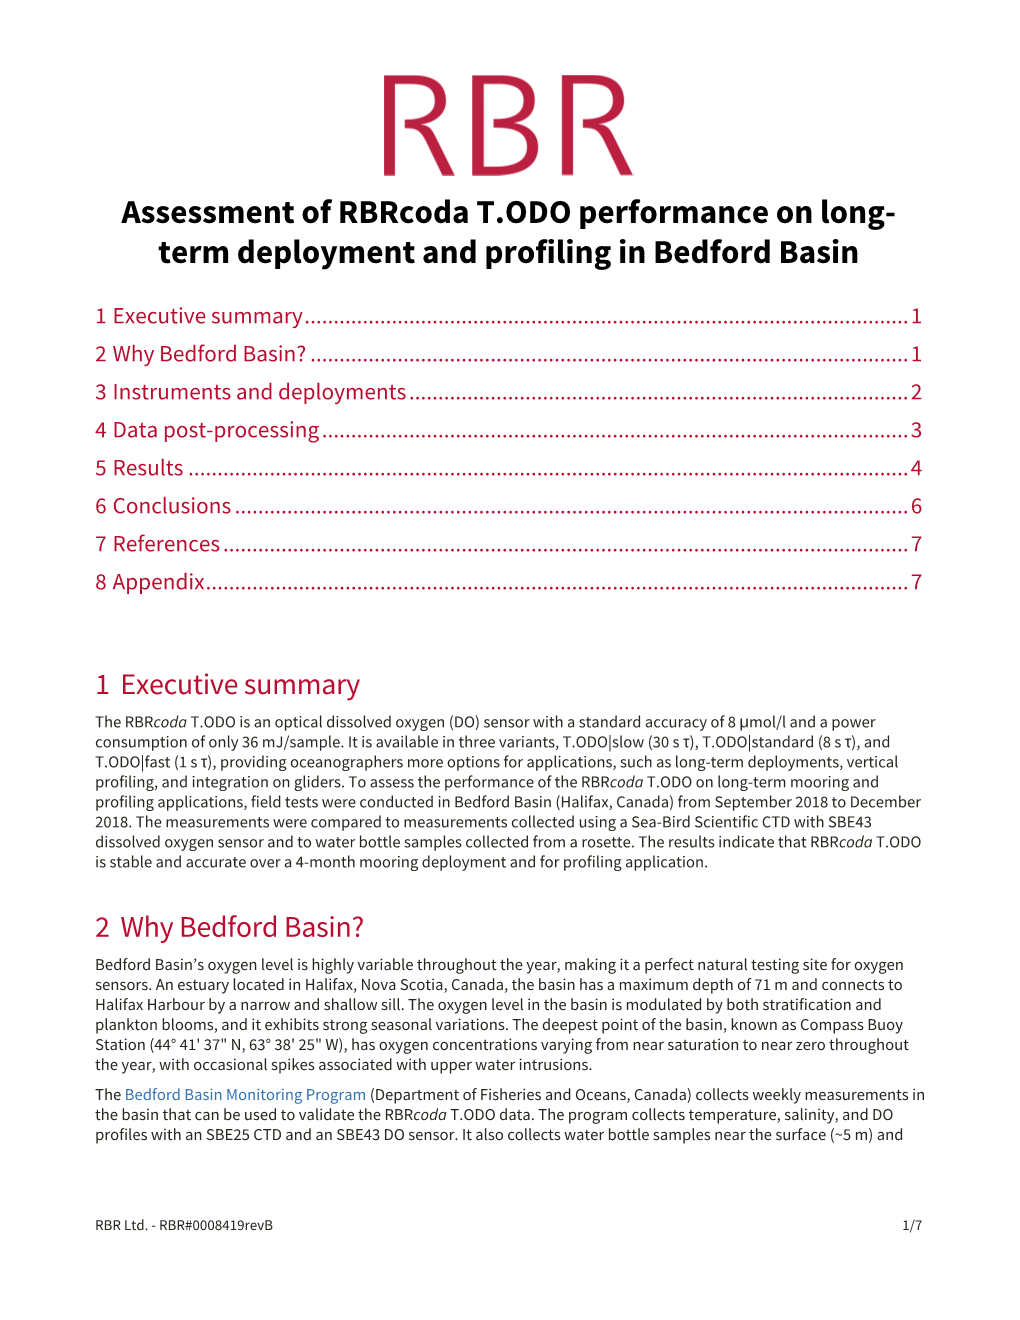 Assessment of Rbrcoda T.ODO Performance on Long-Term